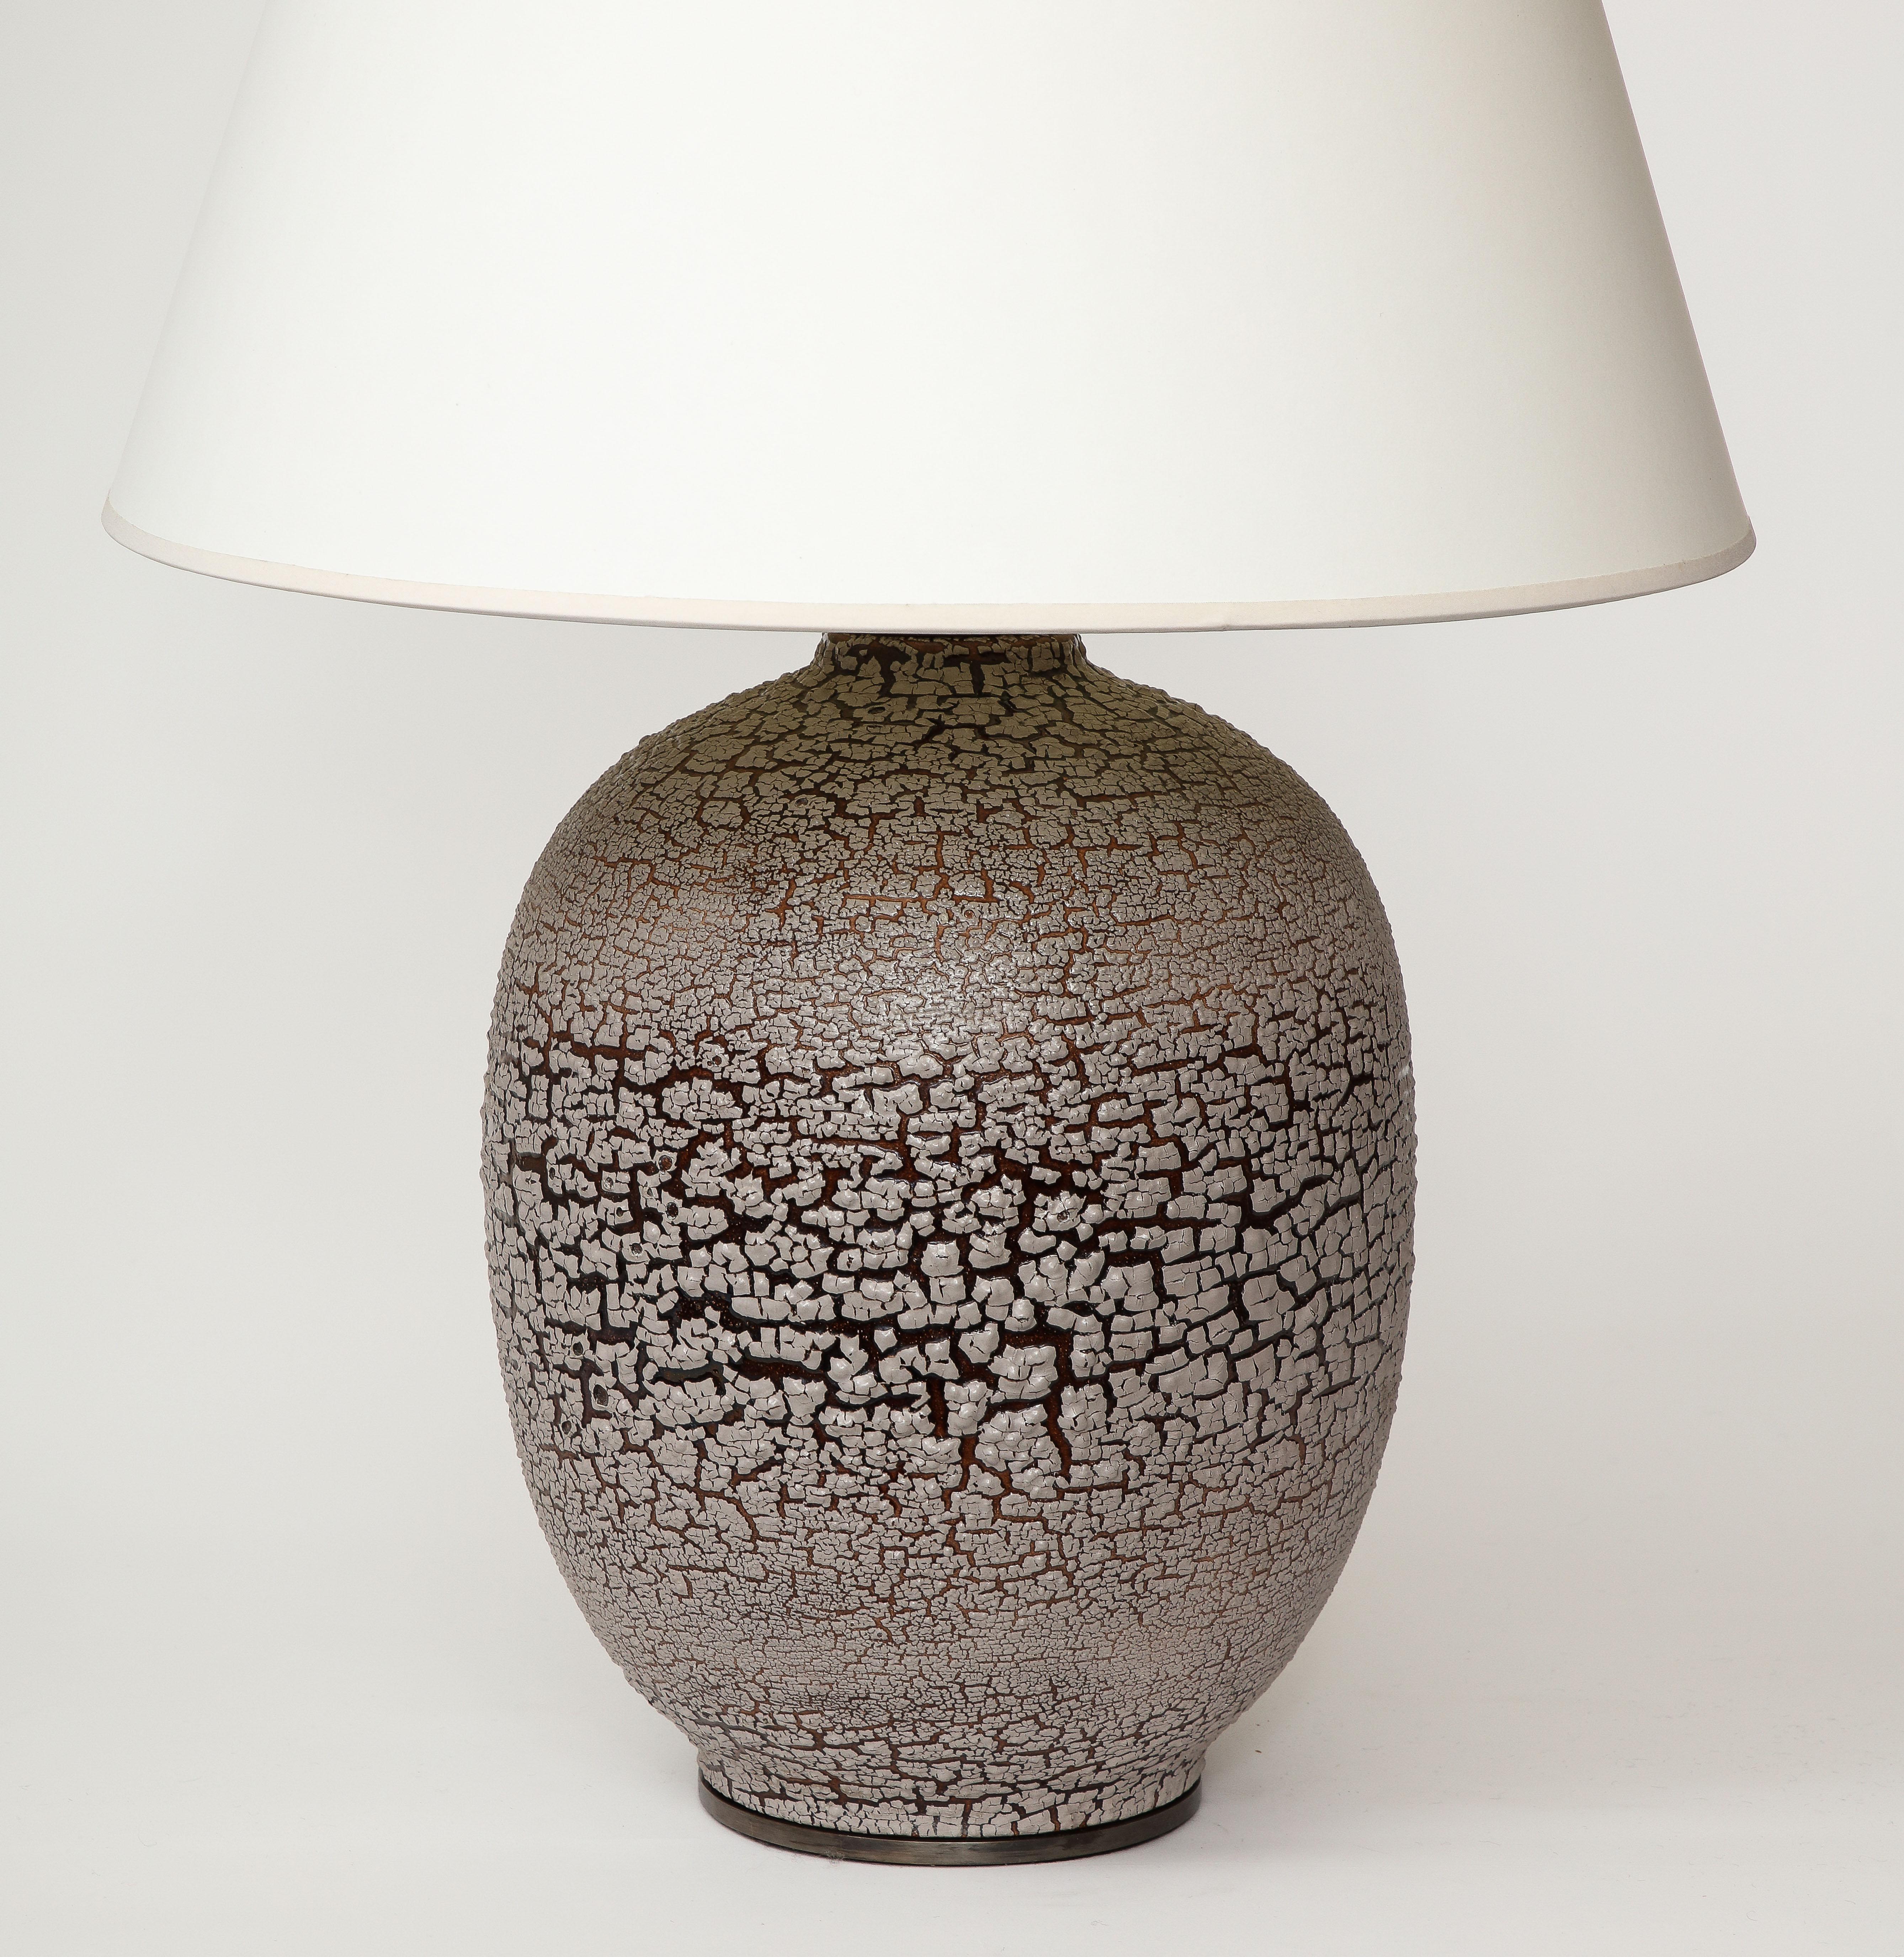 Modern Crackle Glazed Ceramic Table Lamp, Keramos, France, c. 1950 For Sale